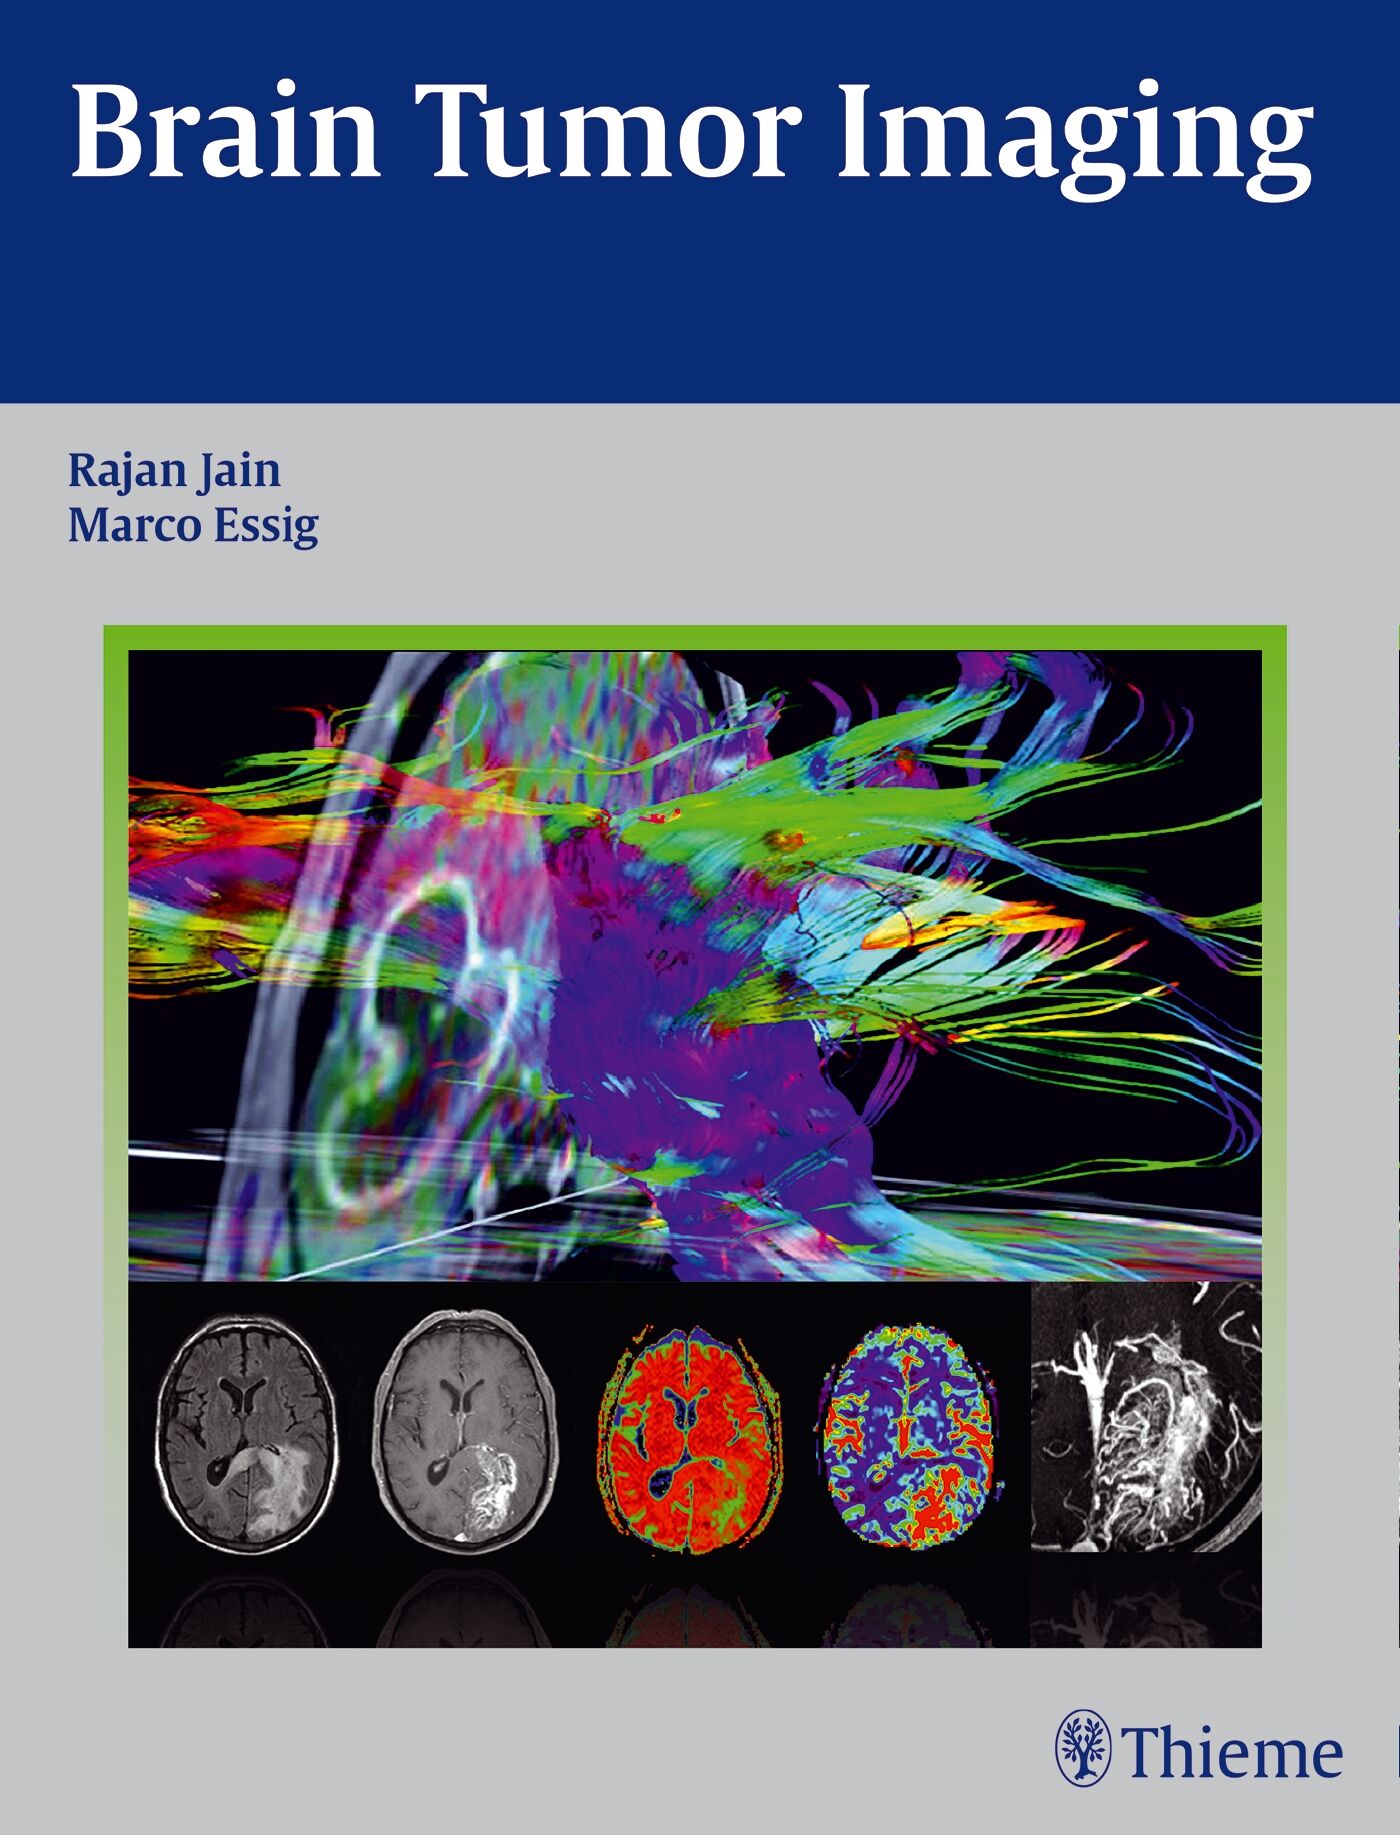 Brain Tumor Imaging, 9781604068061